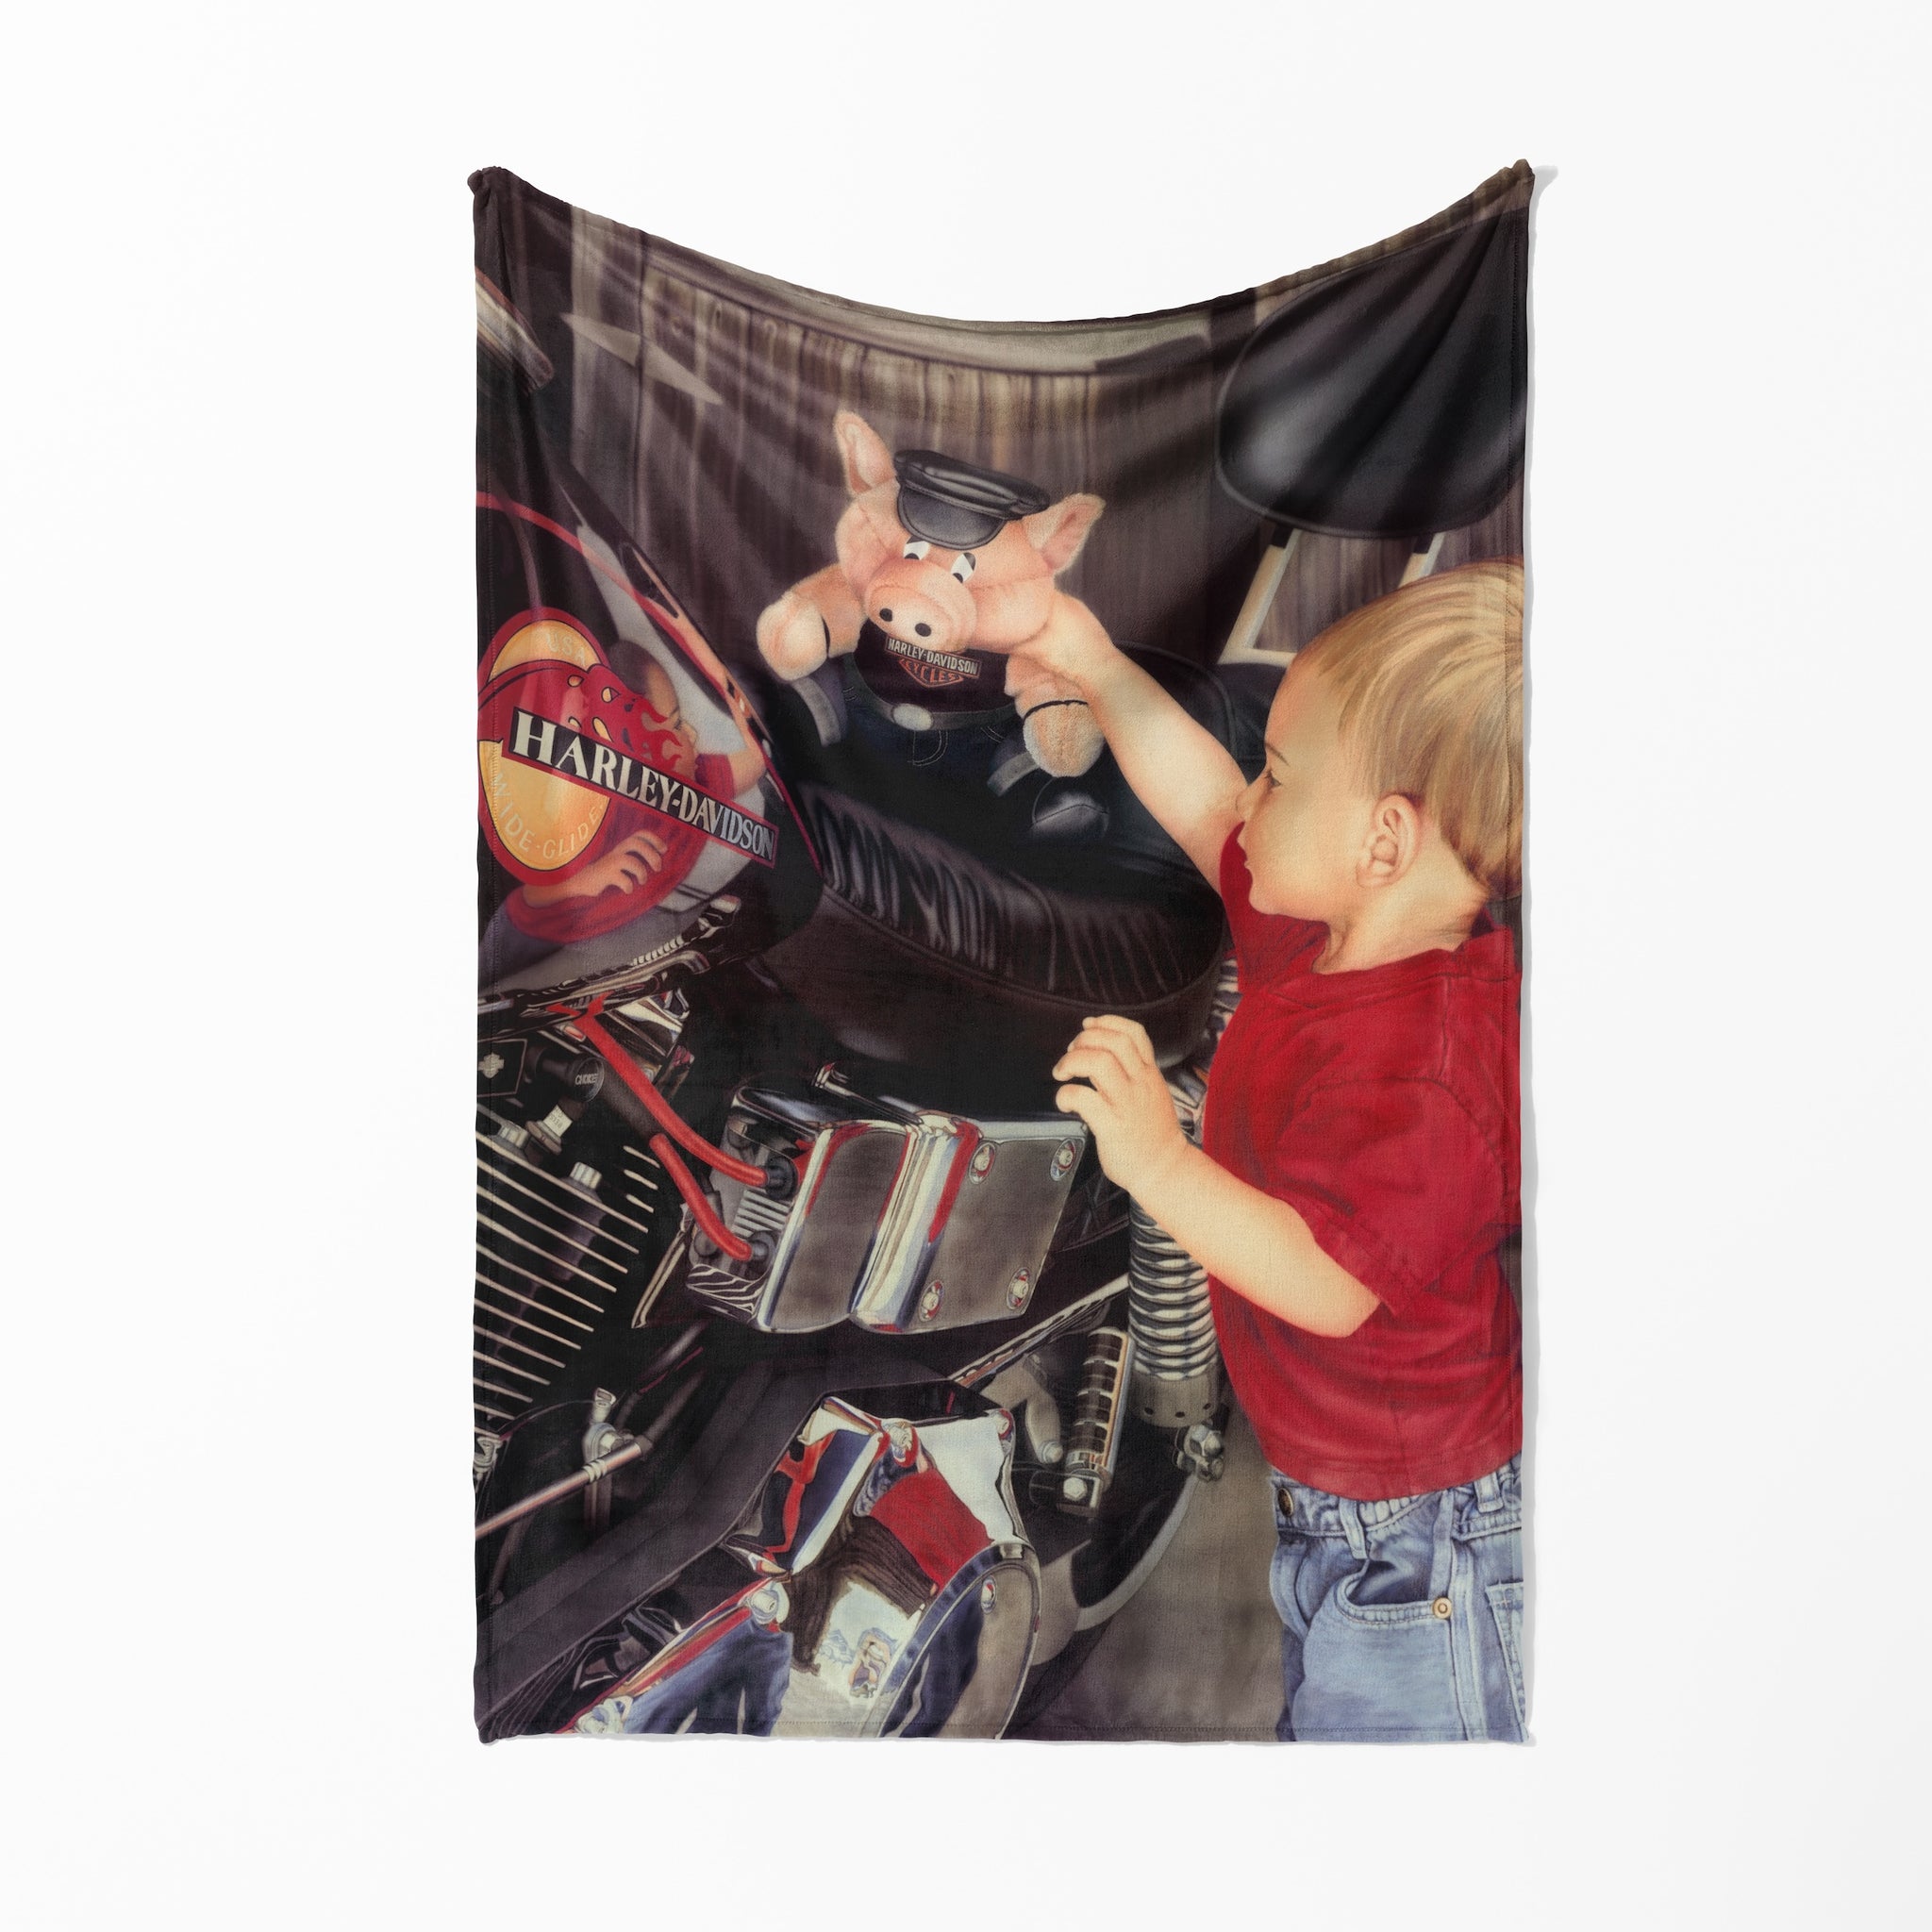 Harley Davidson Blanket | Harley Davidson Blankets | Harley Davidson Fleece Blanket